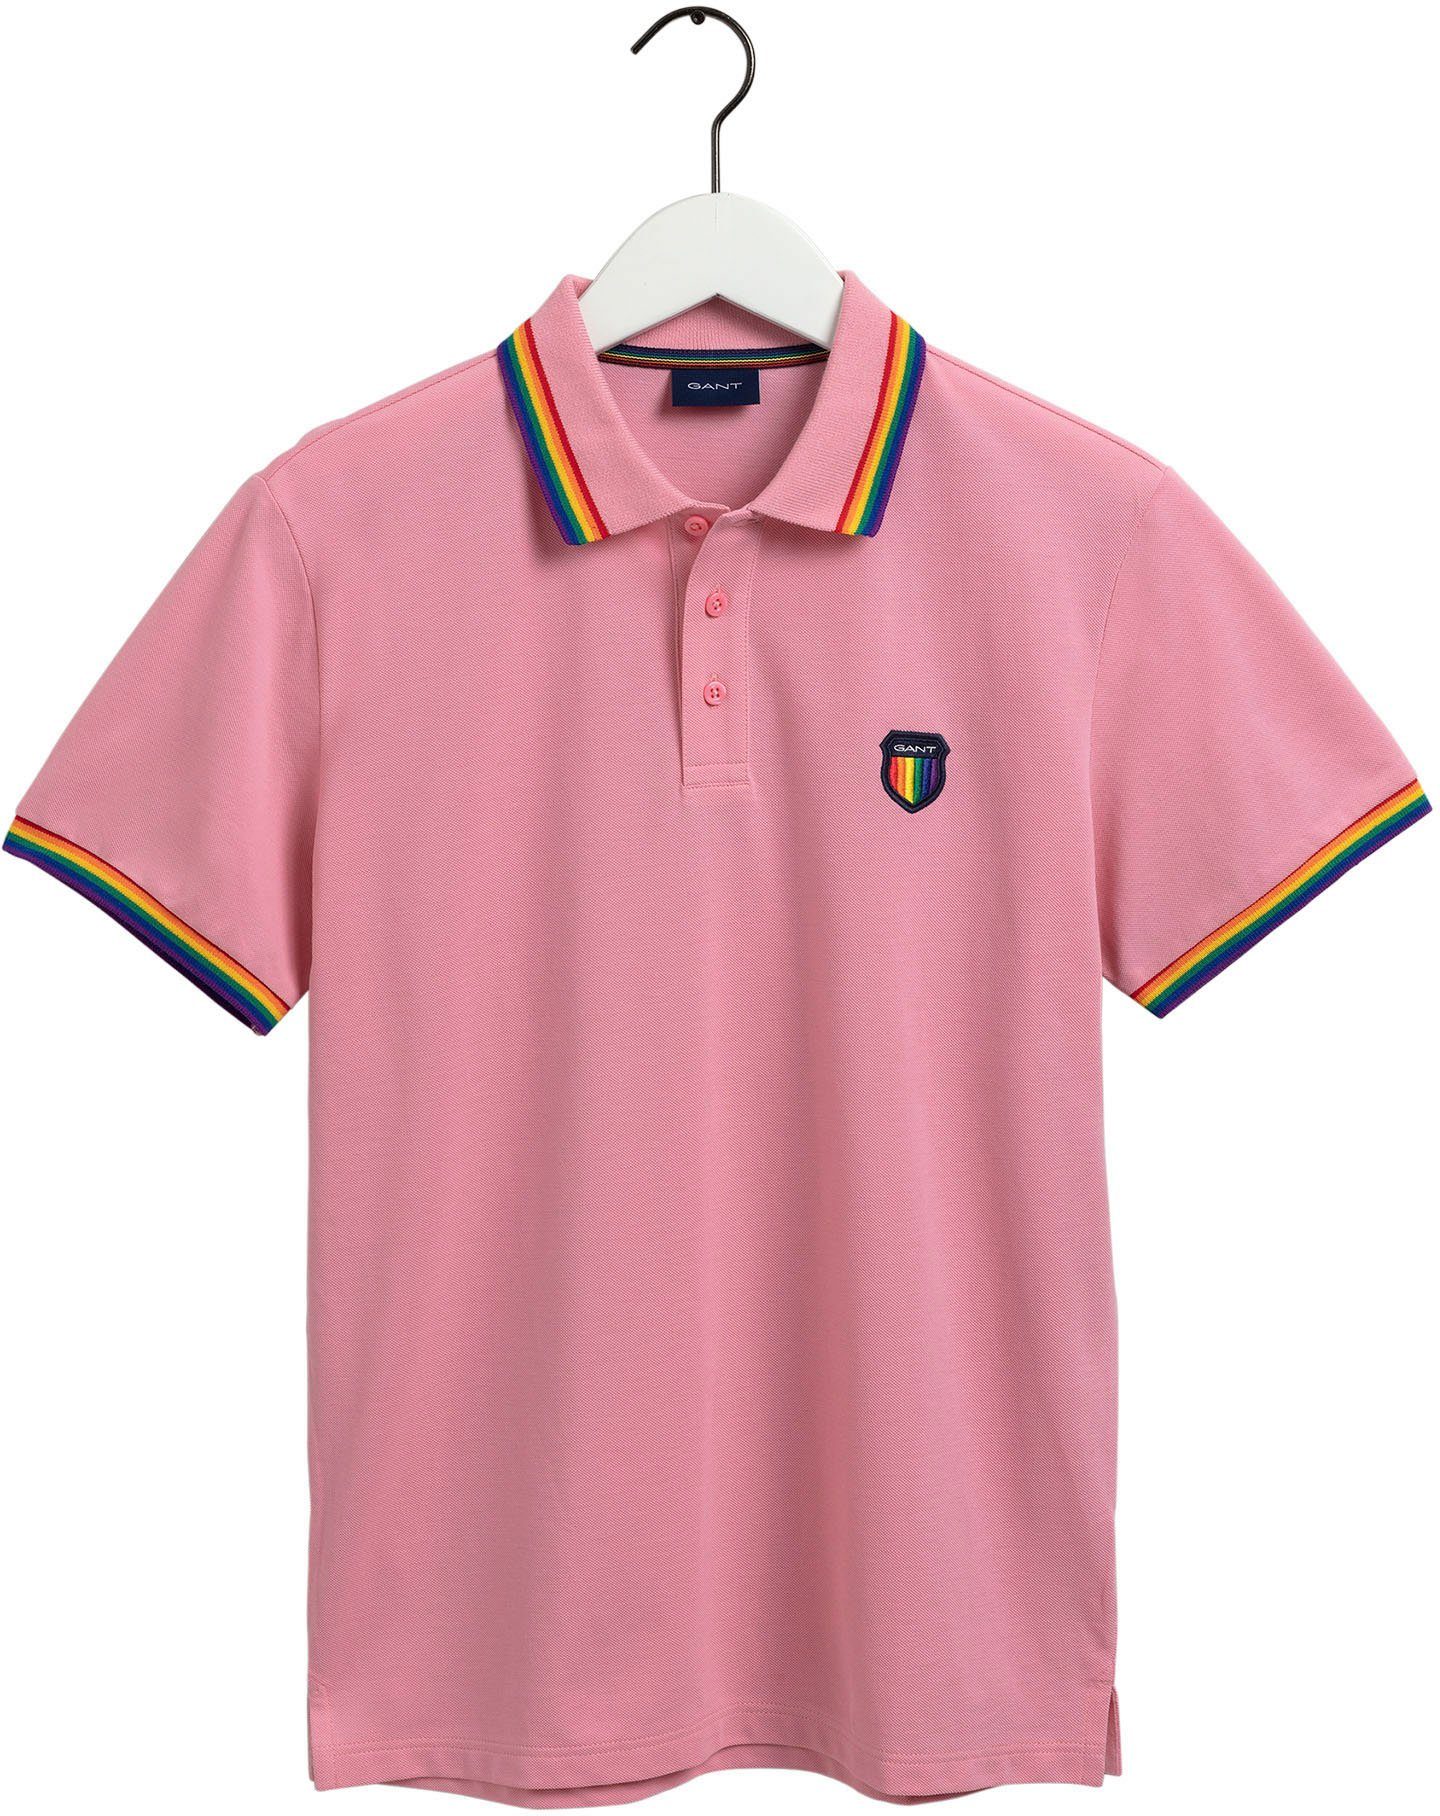 Gant Poloshirts online kaufen » Polohemden | OTTO